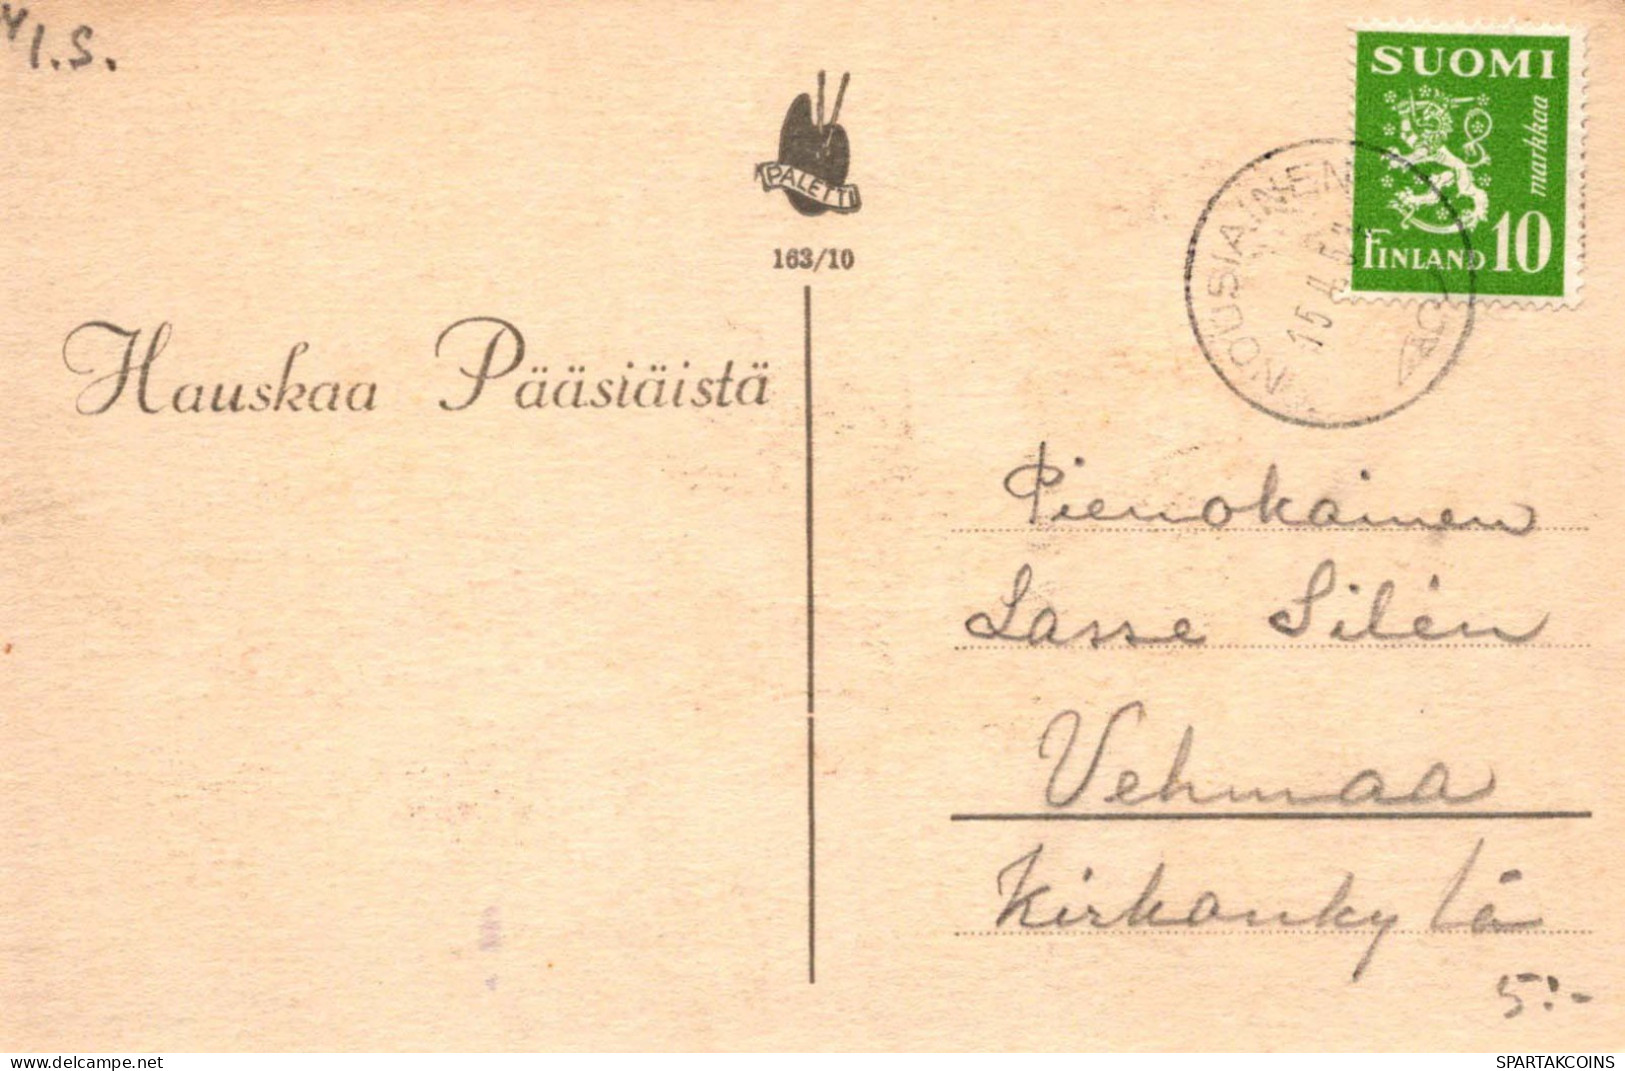 PASCUA NIÑOS HUEVO Vintage Tarjeta Postal CPA #PKE217.A - Easter